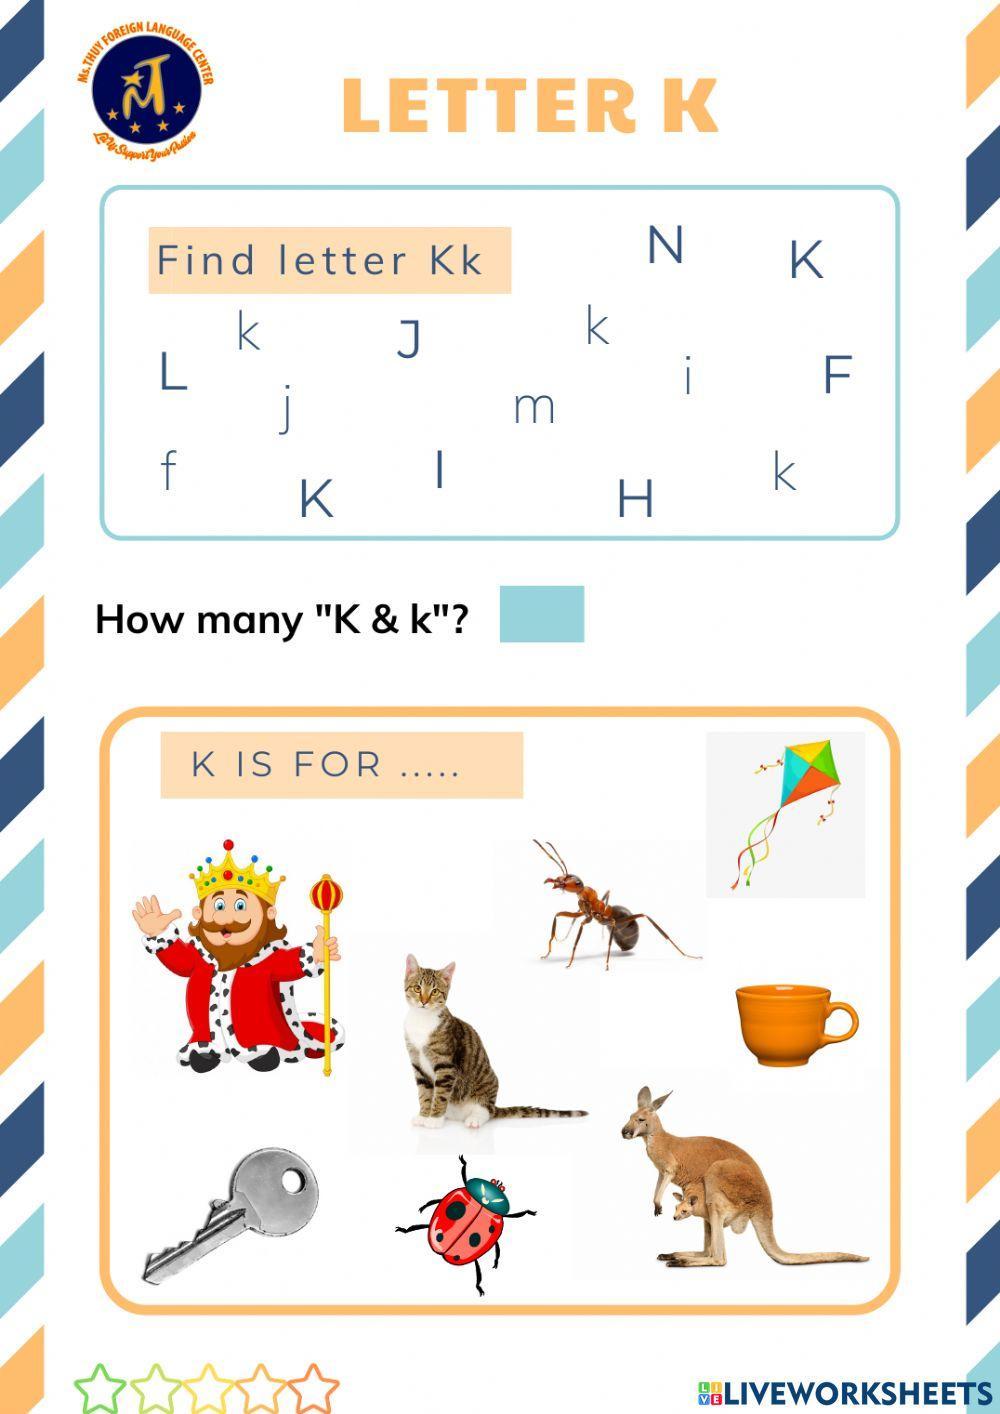 Find Letter Kk